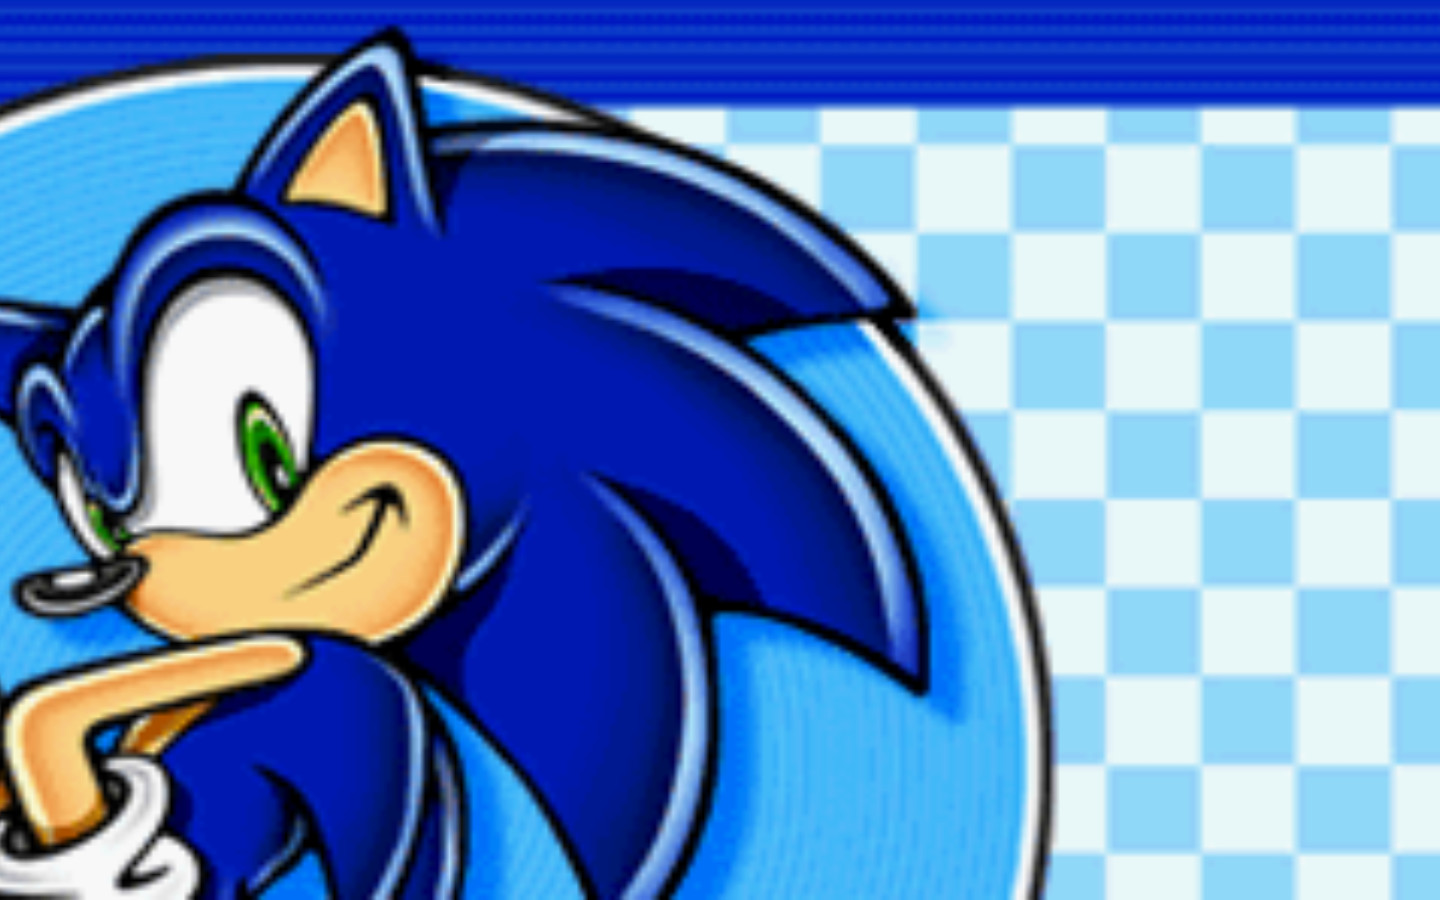 Sonic Advance 1